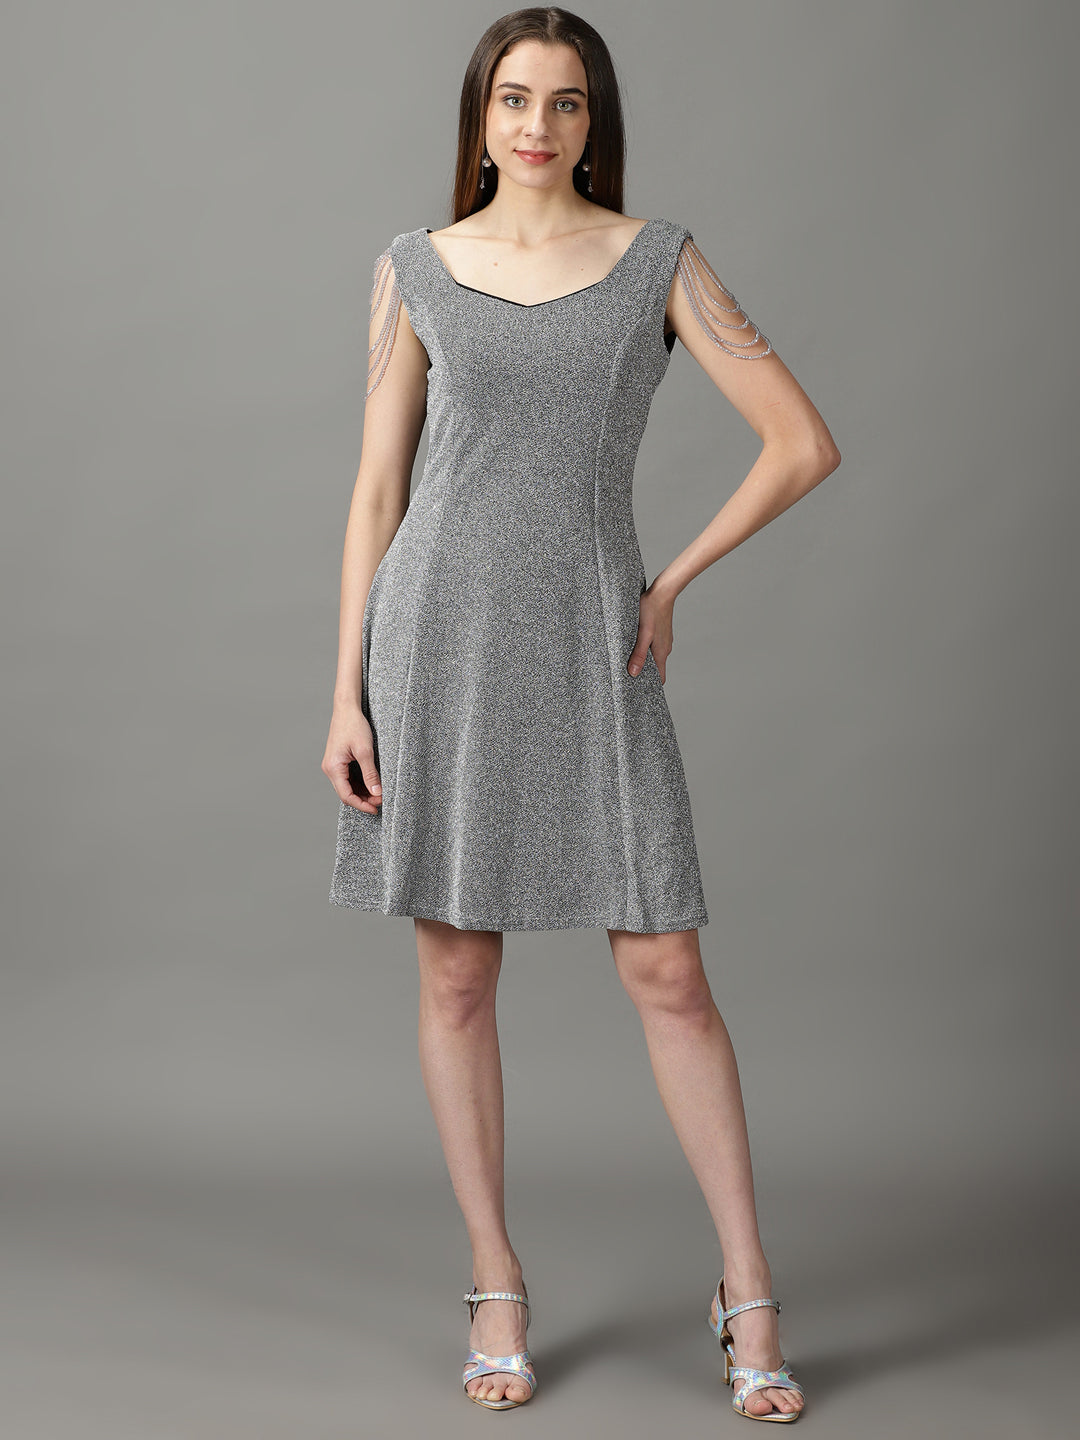 Women's Silver Embellished A-Line Dress